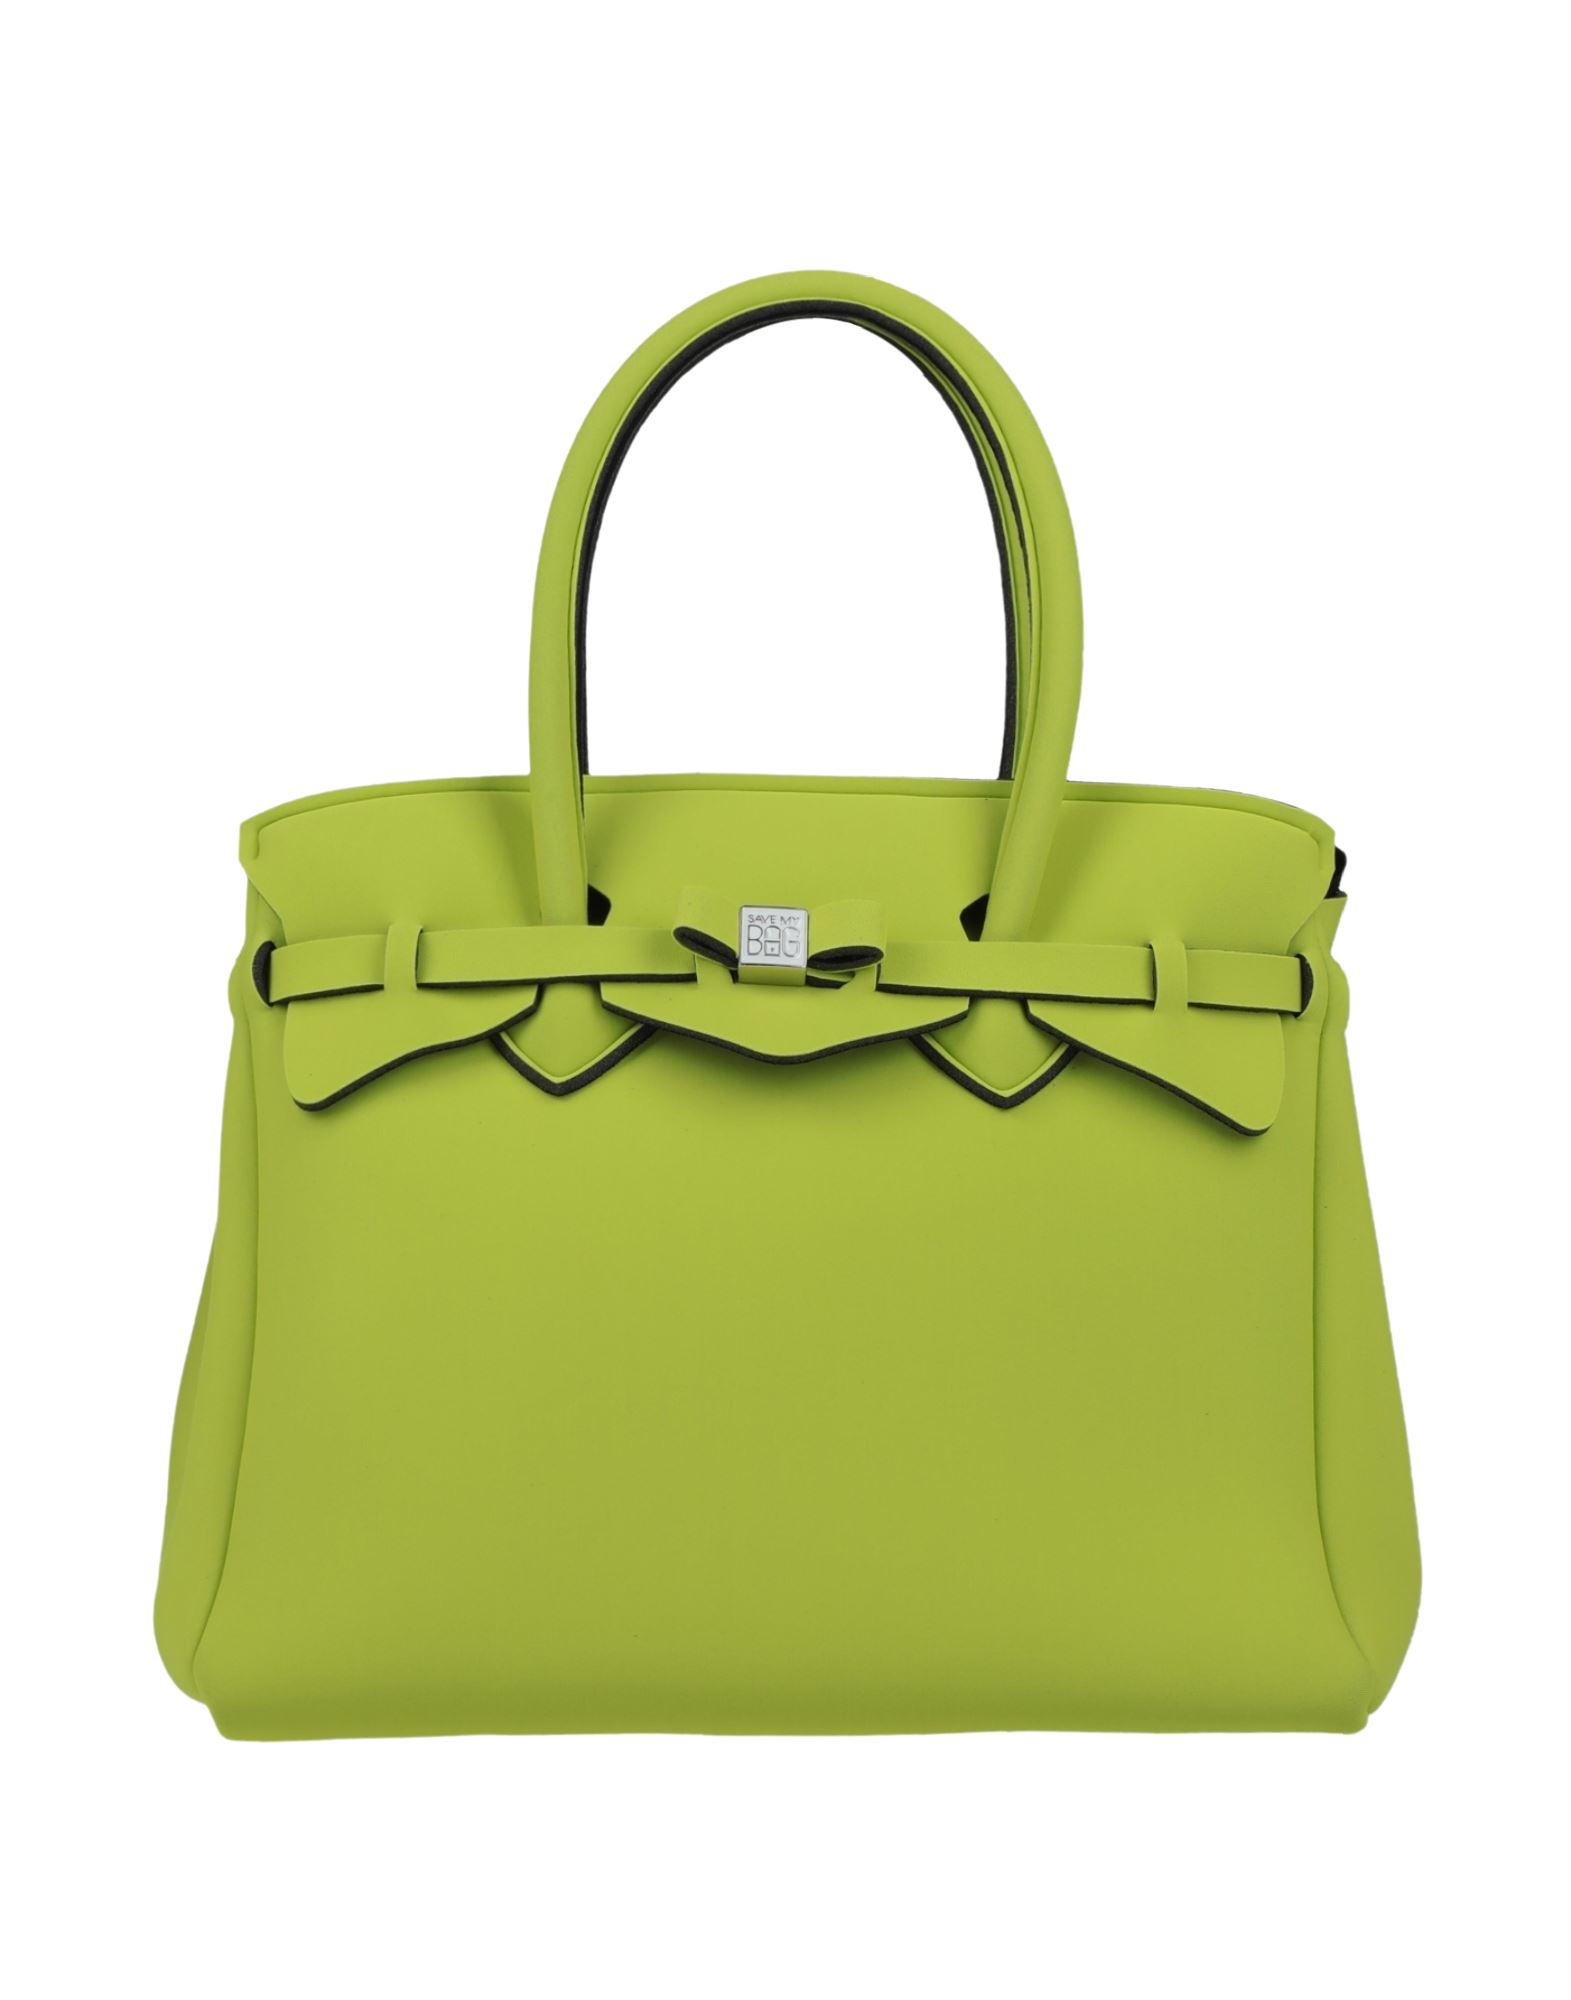 Save My Bag Handbags In Acid Green